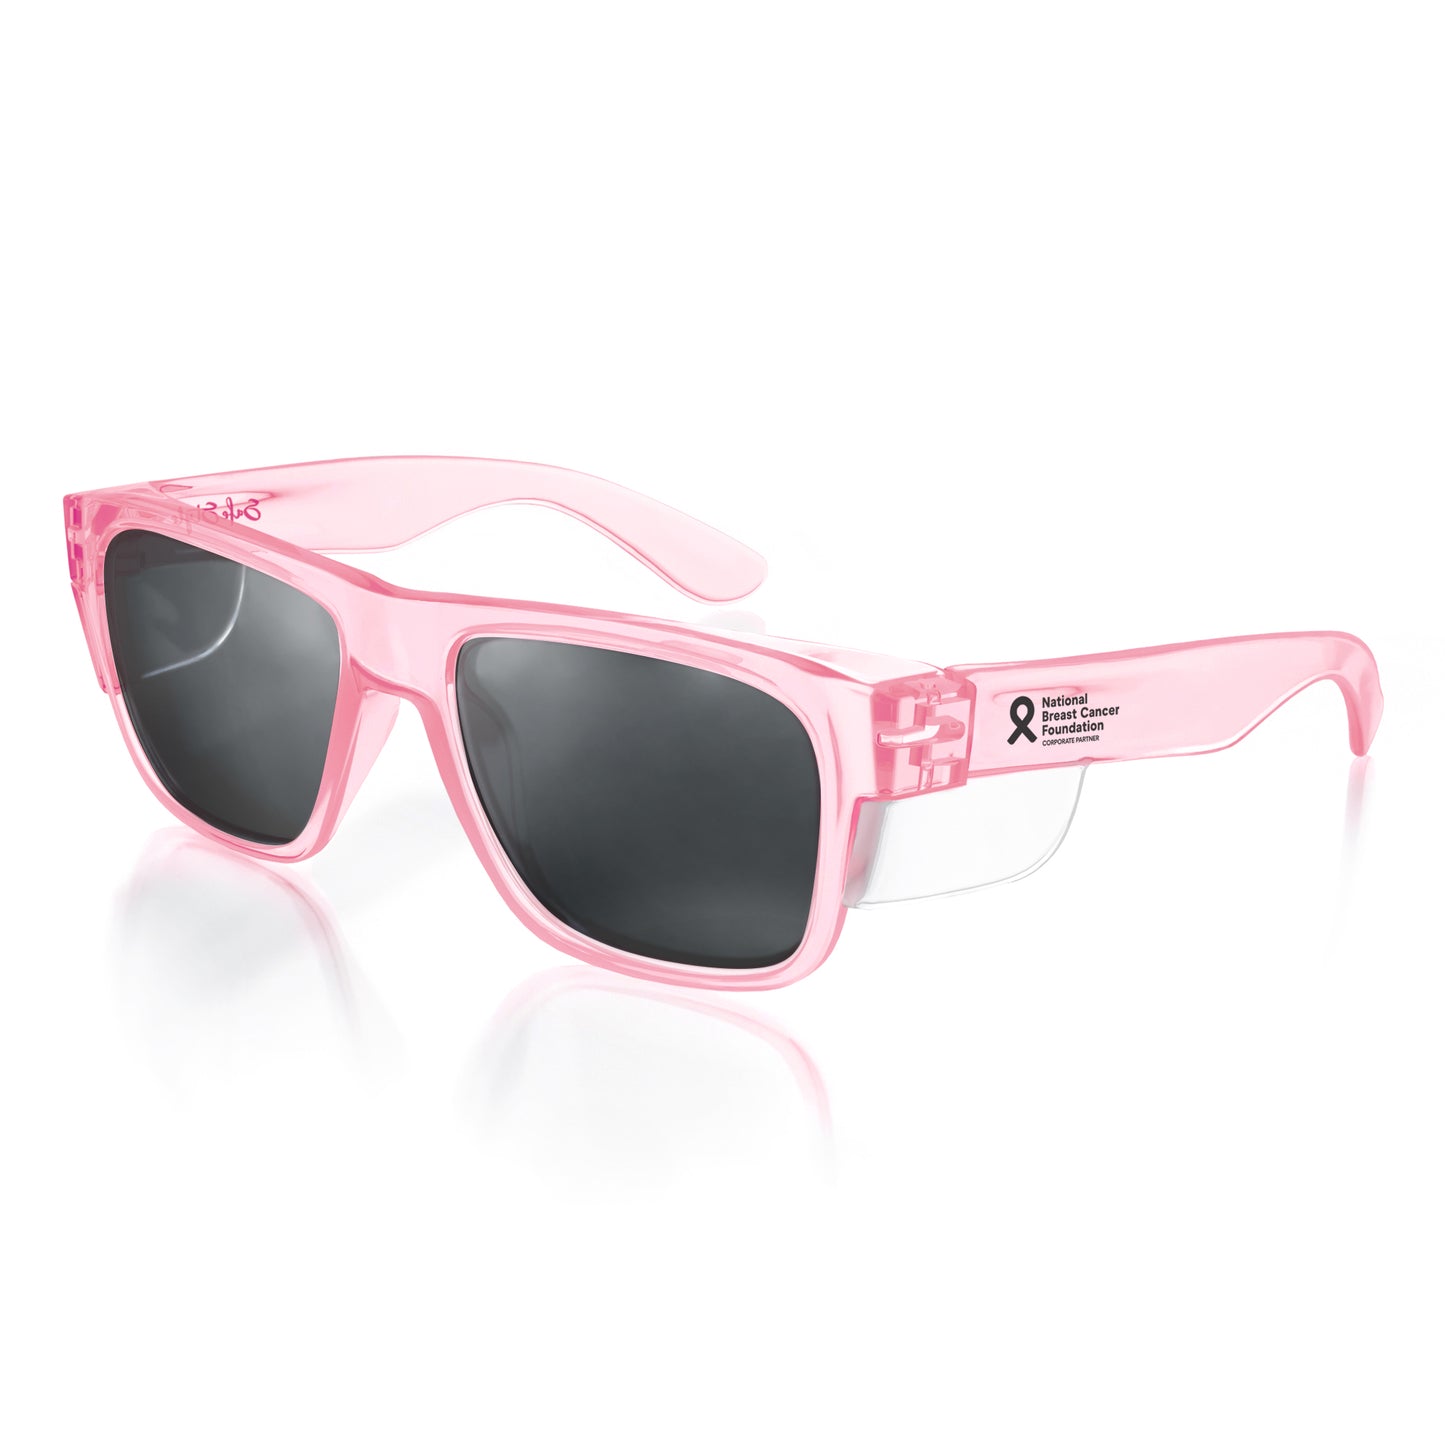 SafeStyle Fusions Pink Frame/ Polarised Uv400